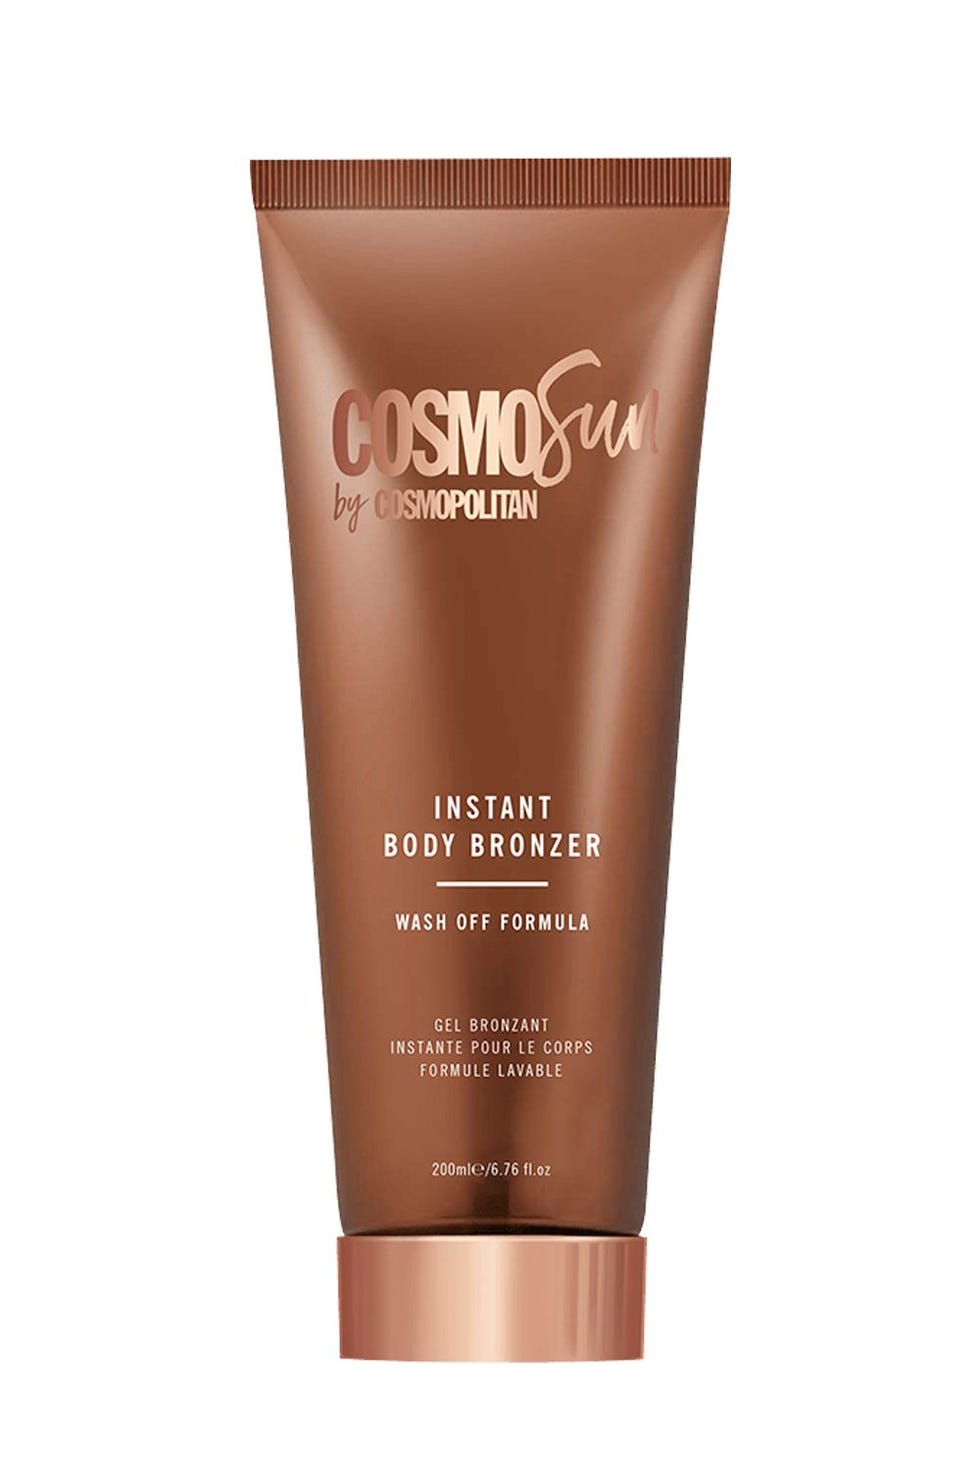 Cosmo Sun by Cosmopolitan Instant Body Bronzer